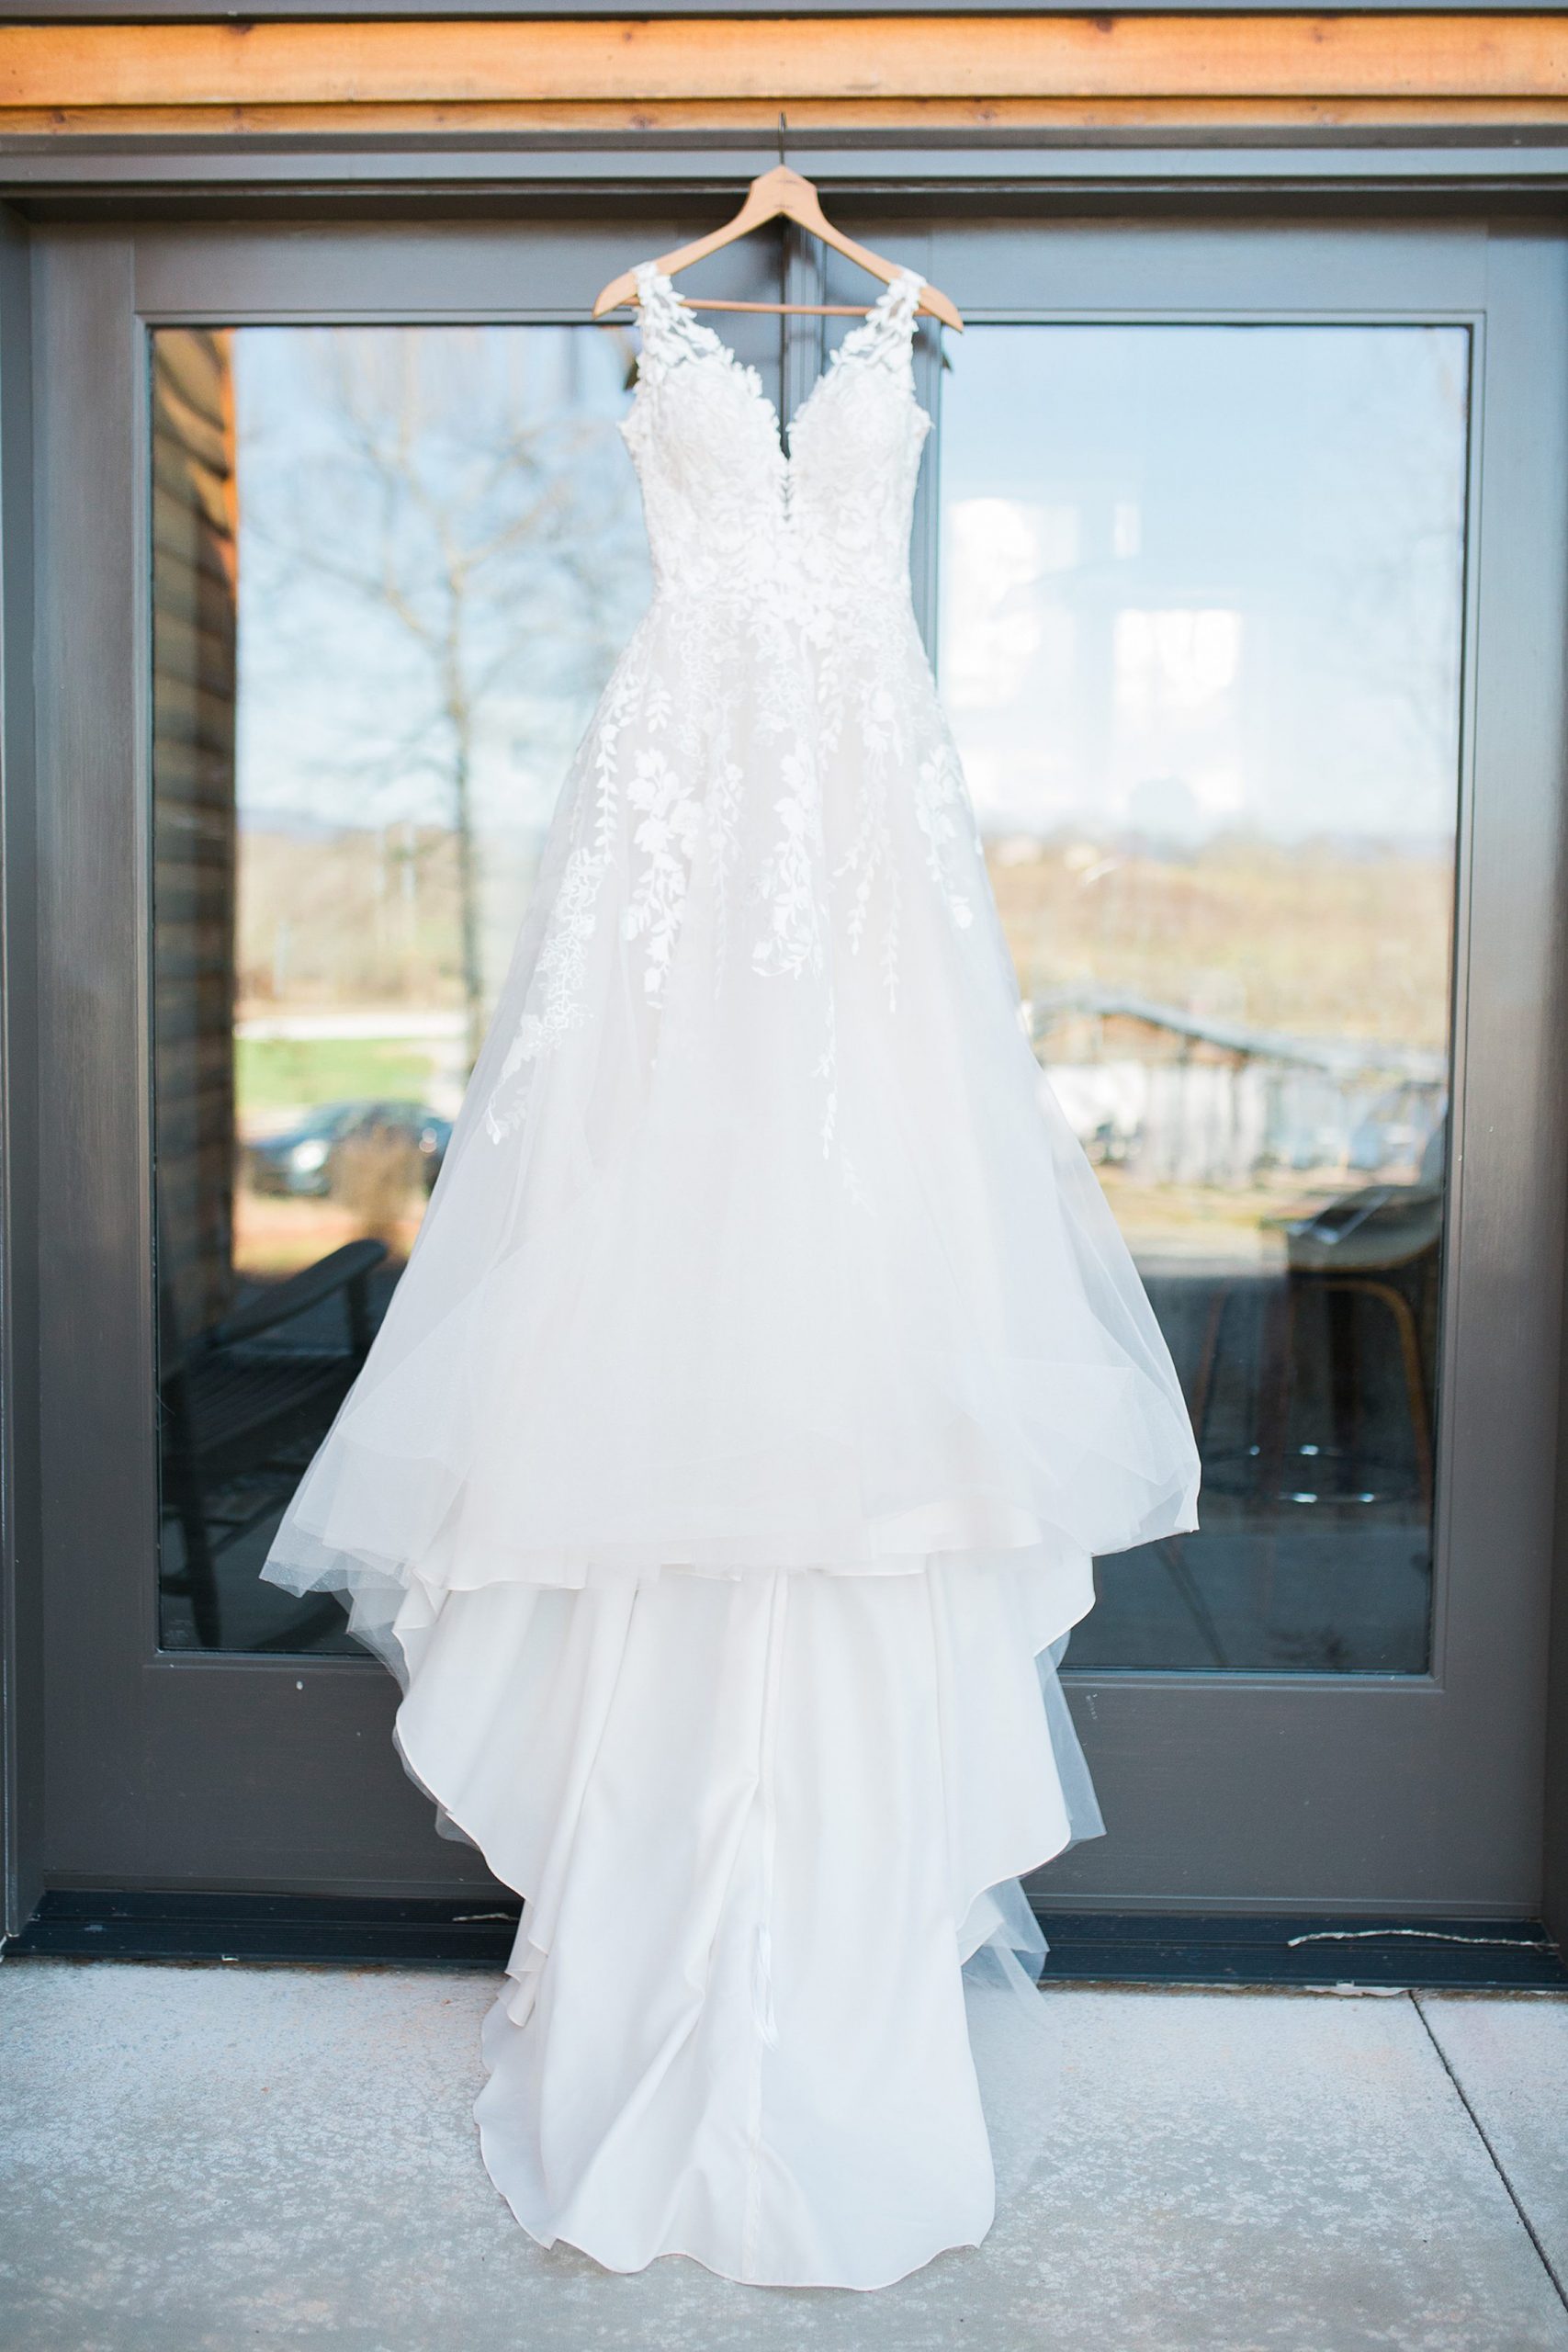 poinsett-bride-dress